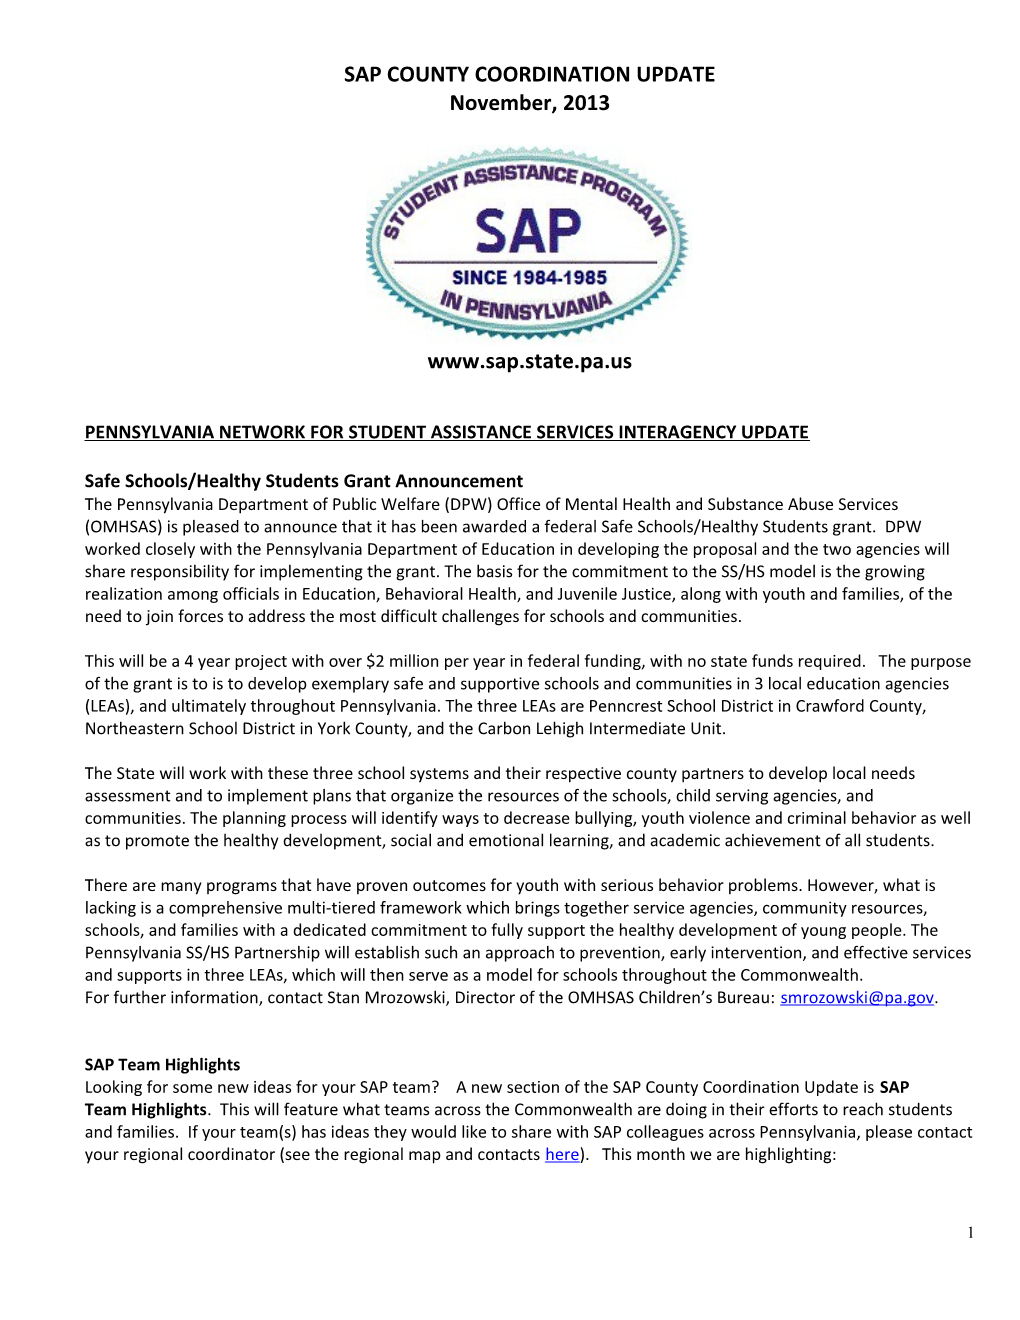 Sap County Coordination Update s1